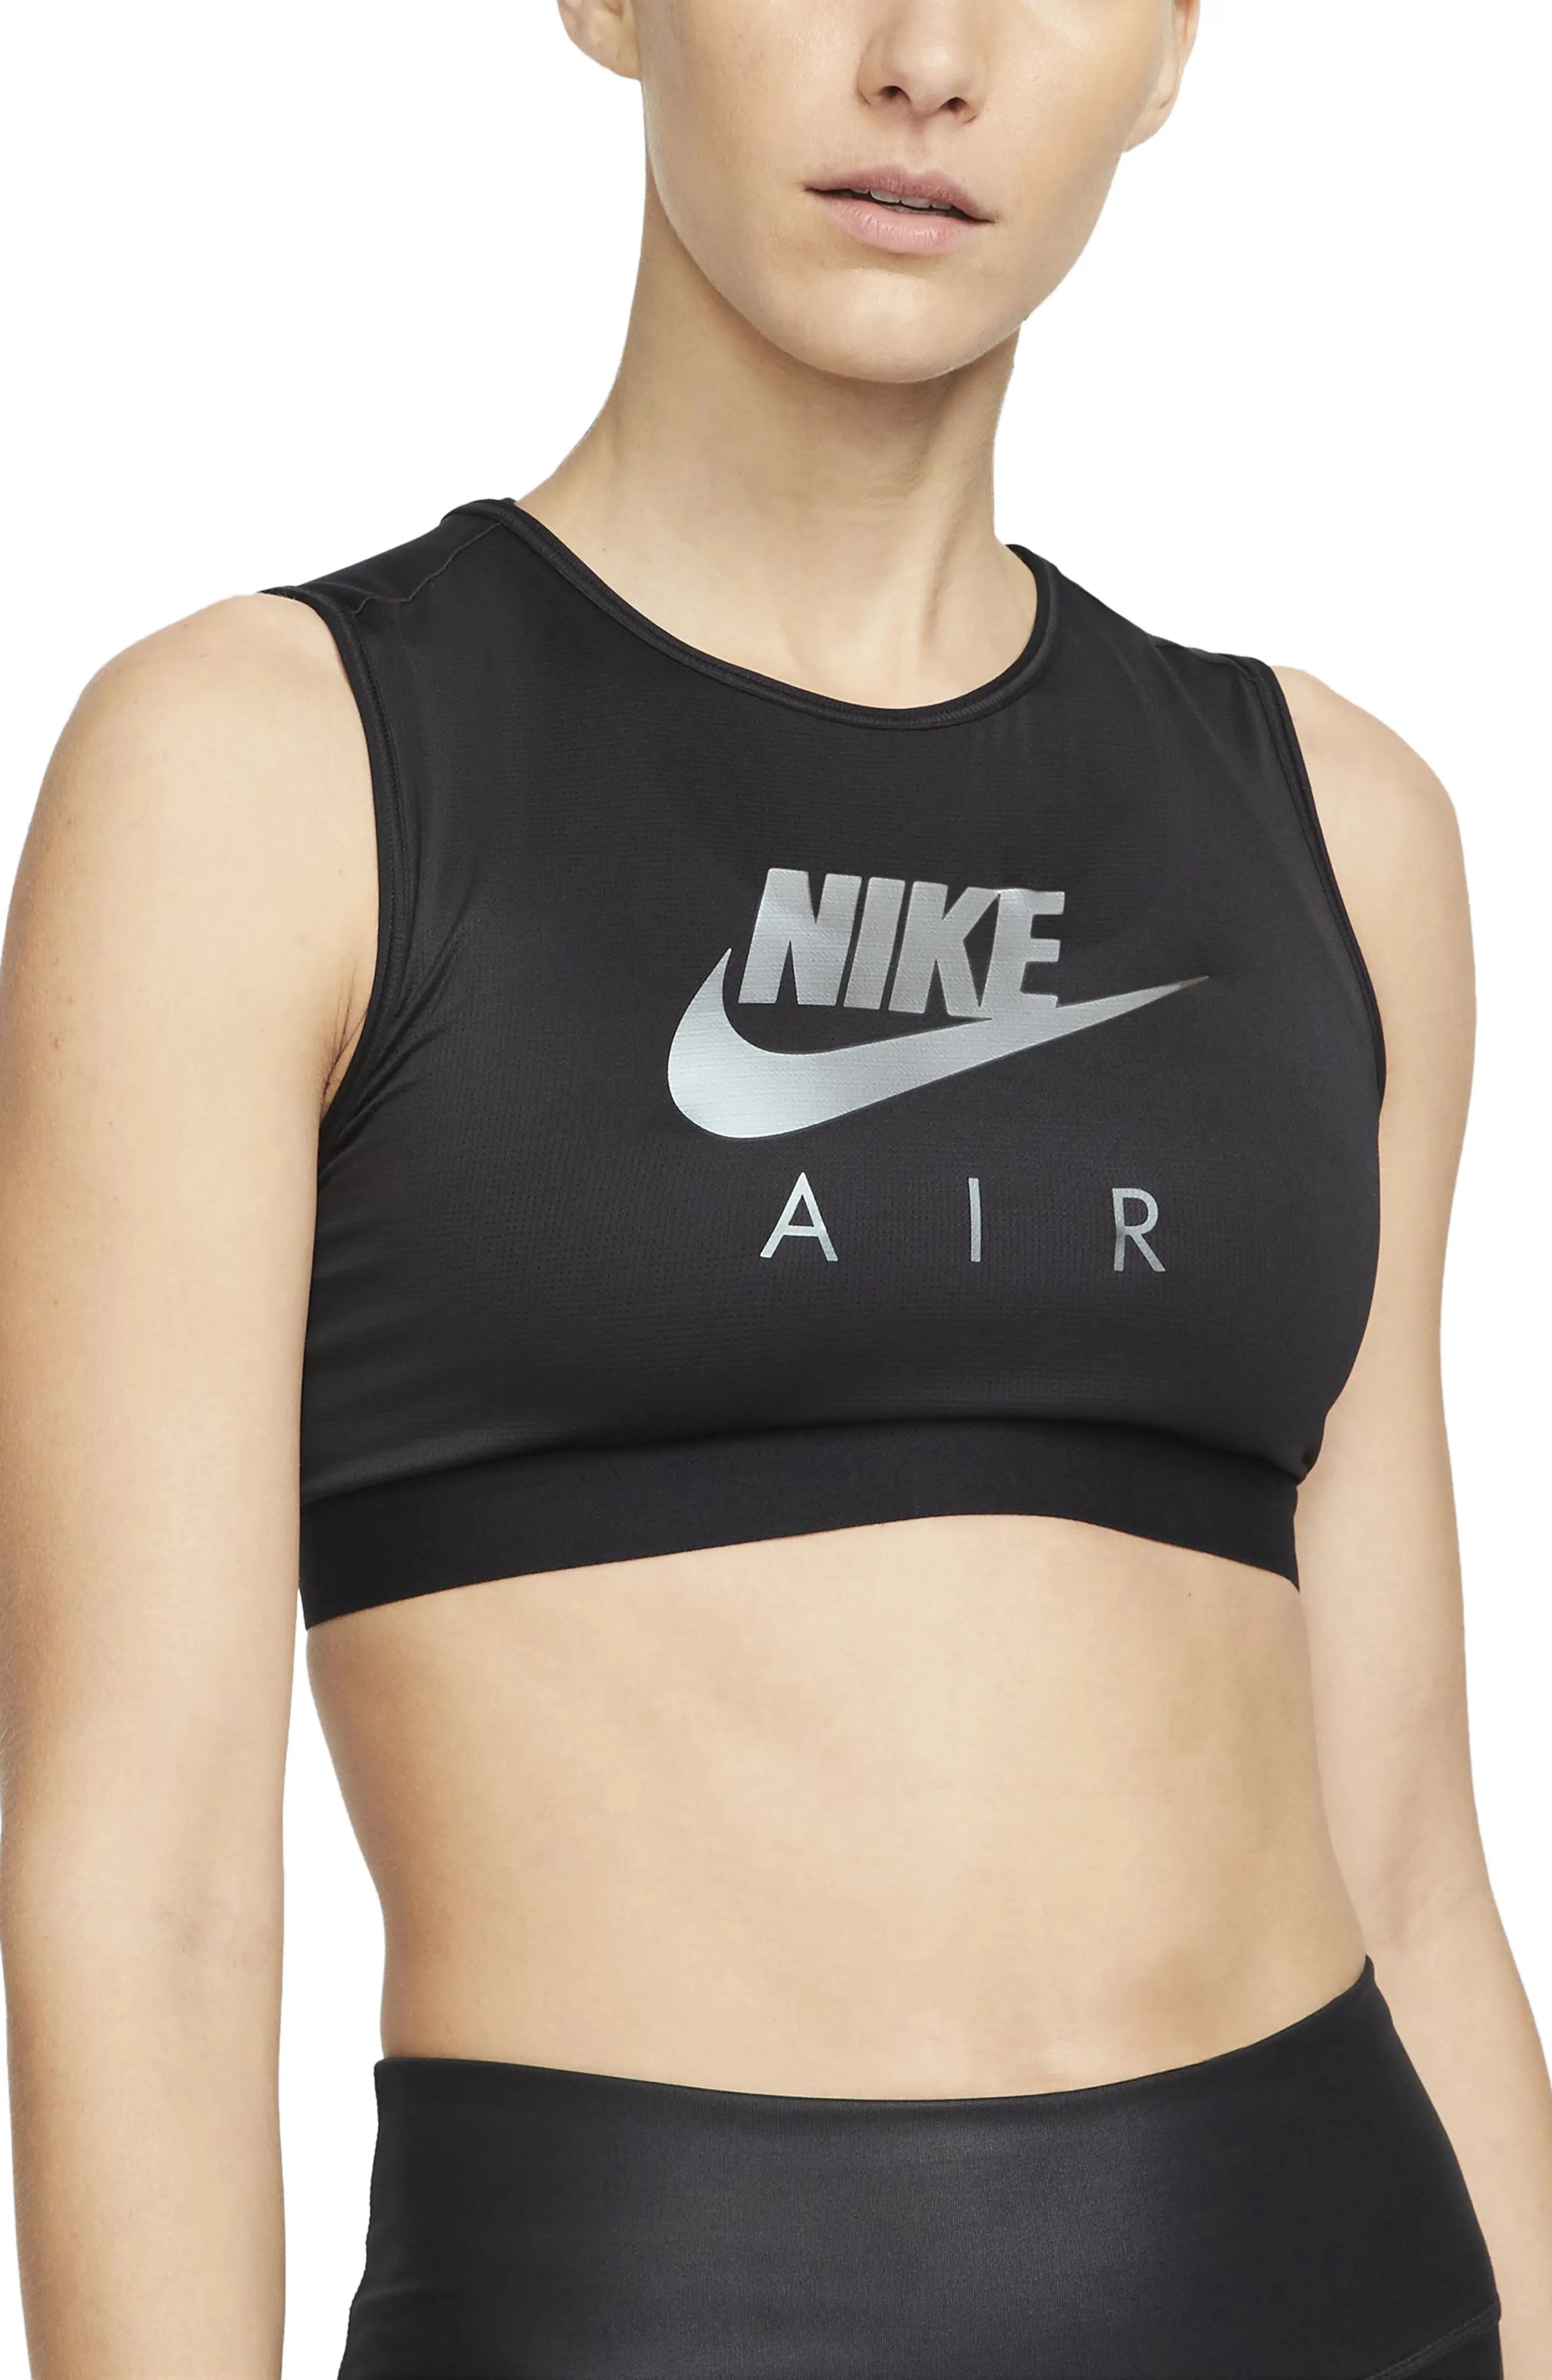 Nike Air Dri-FIT Sports Bra in Black/Black at Nordstrom, Size X-Large | Nordstrom